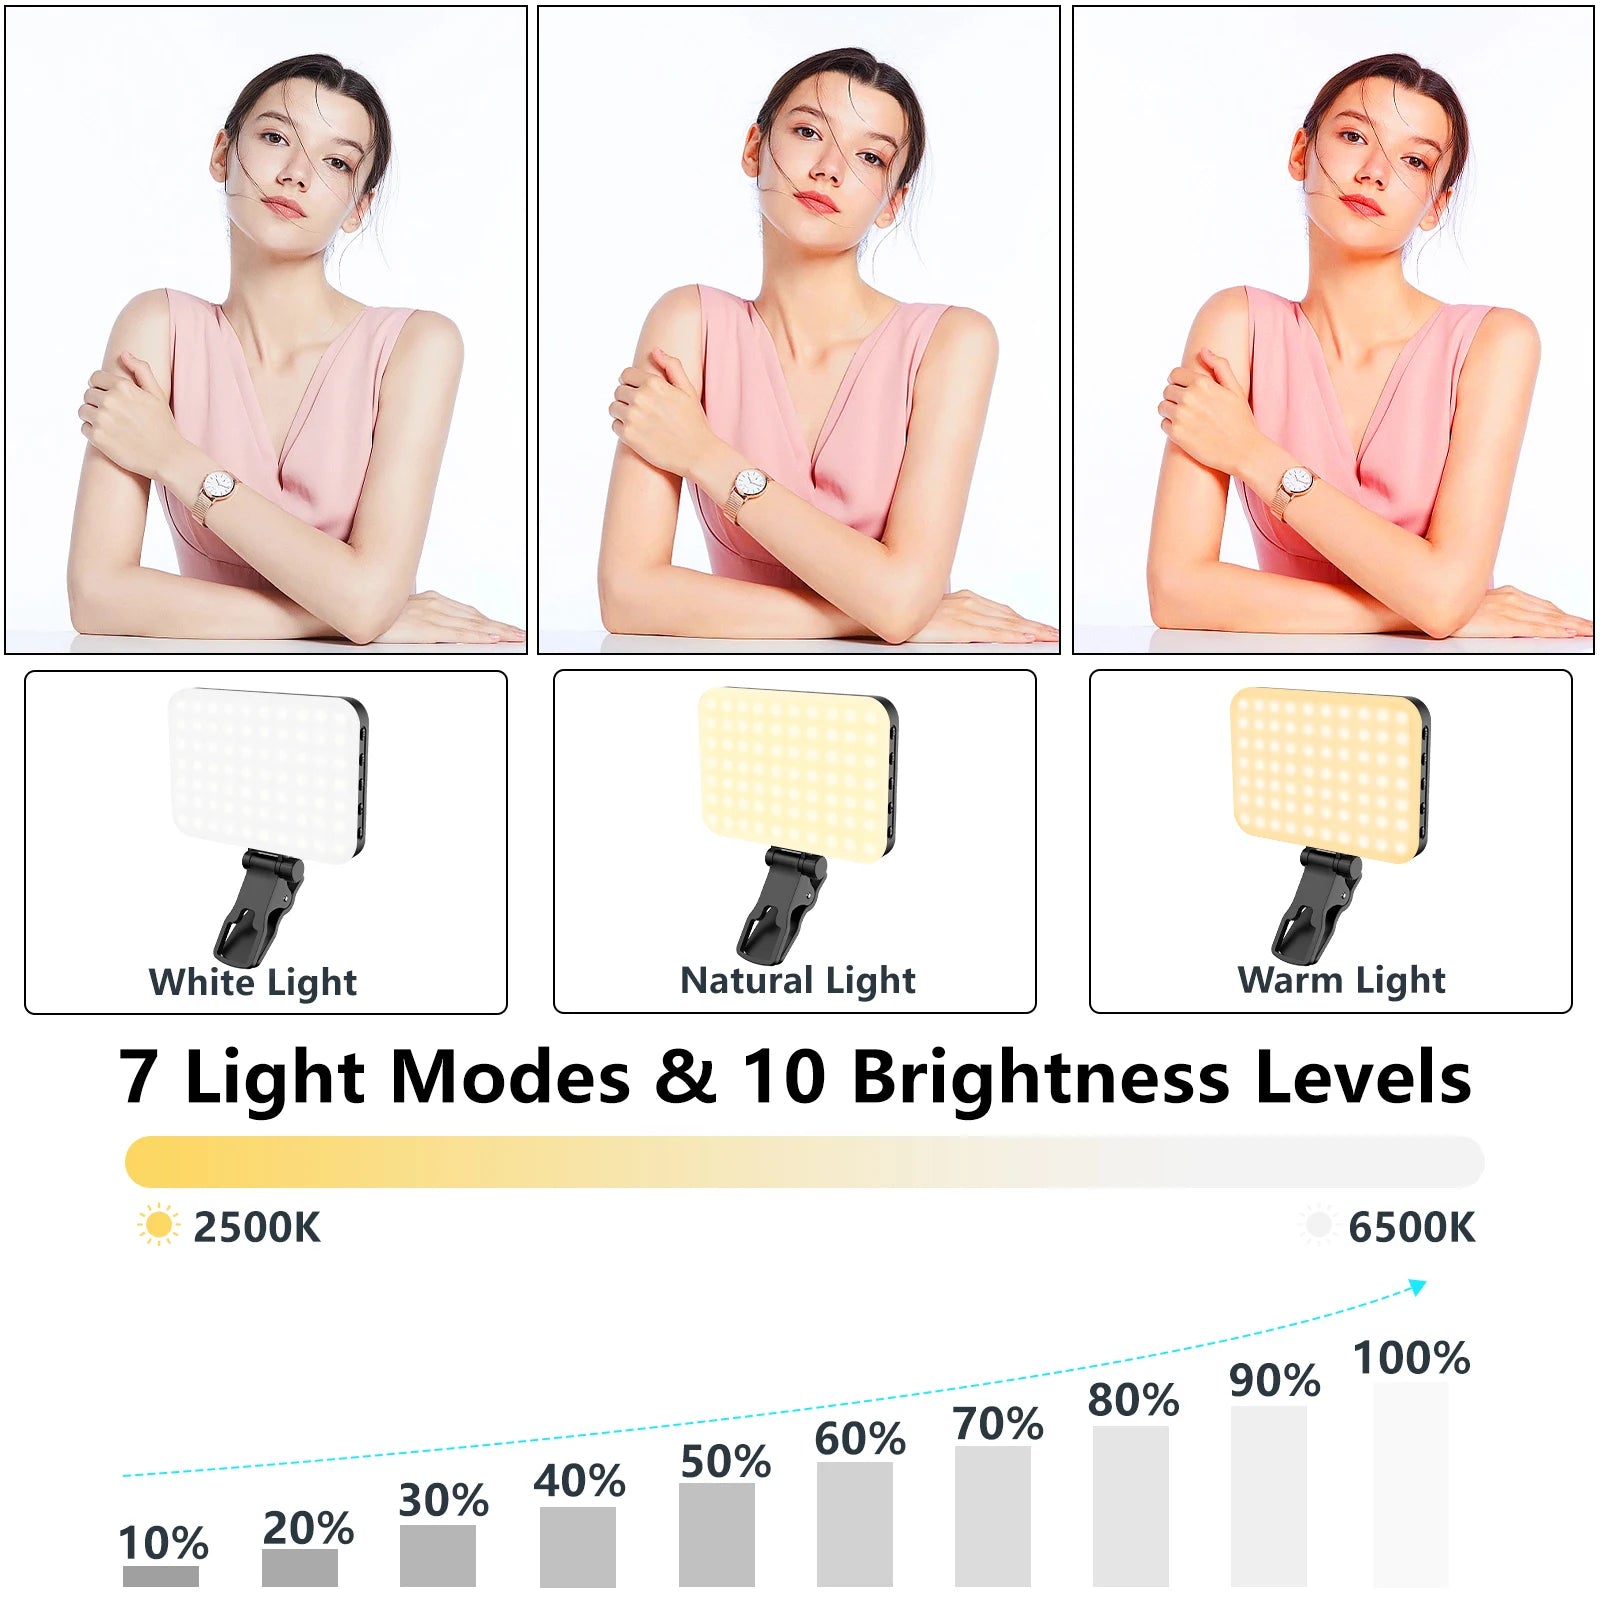 LED Selfie Light 60 High-Quality LED Beads 2200Mah Rechargeable CRI 97+, 7 Light Modes Portable on Light for Phone/Tablet/Laptop